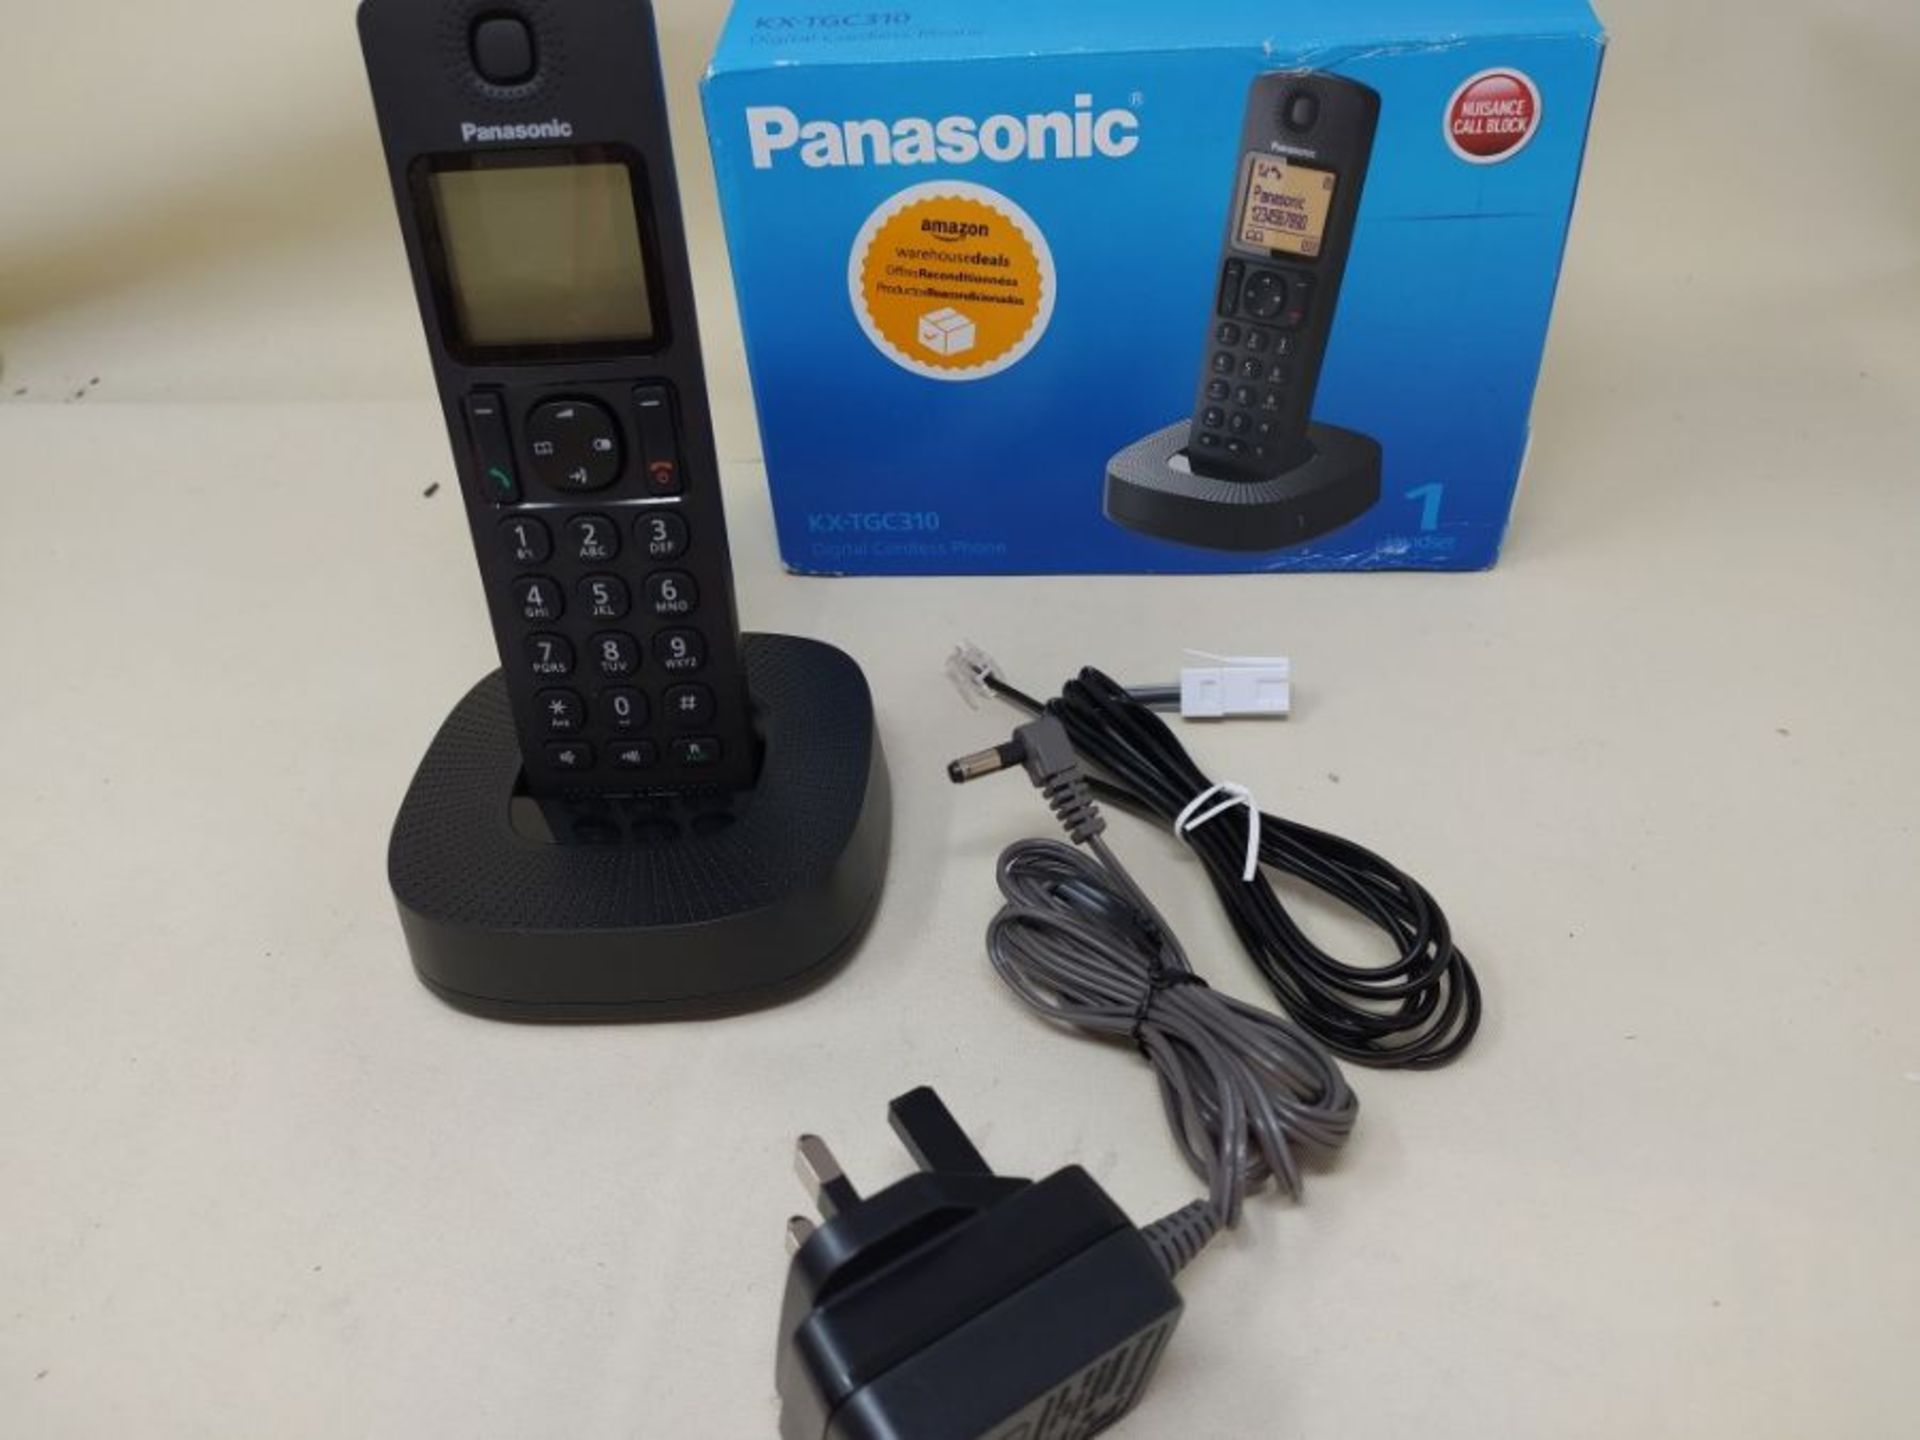 Panasonic KX-TGC310EB Digital Cordless Phone with Nuisance Call Blocker - Black - Image 2 of 4